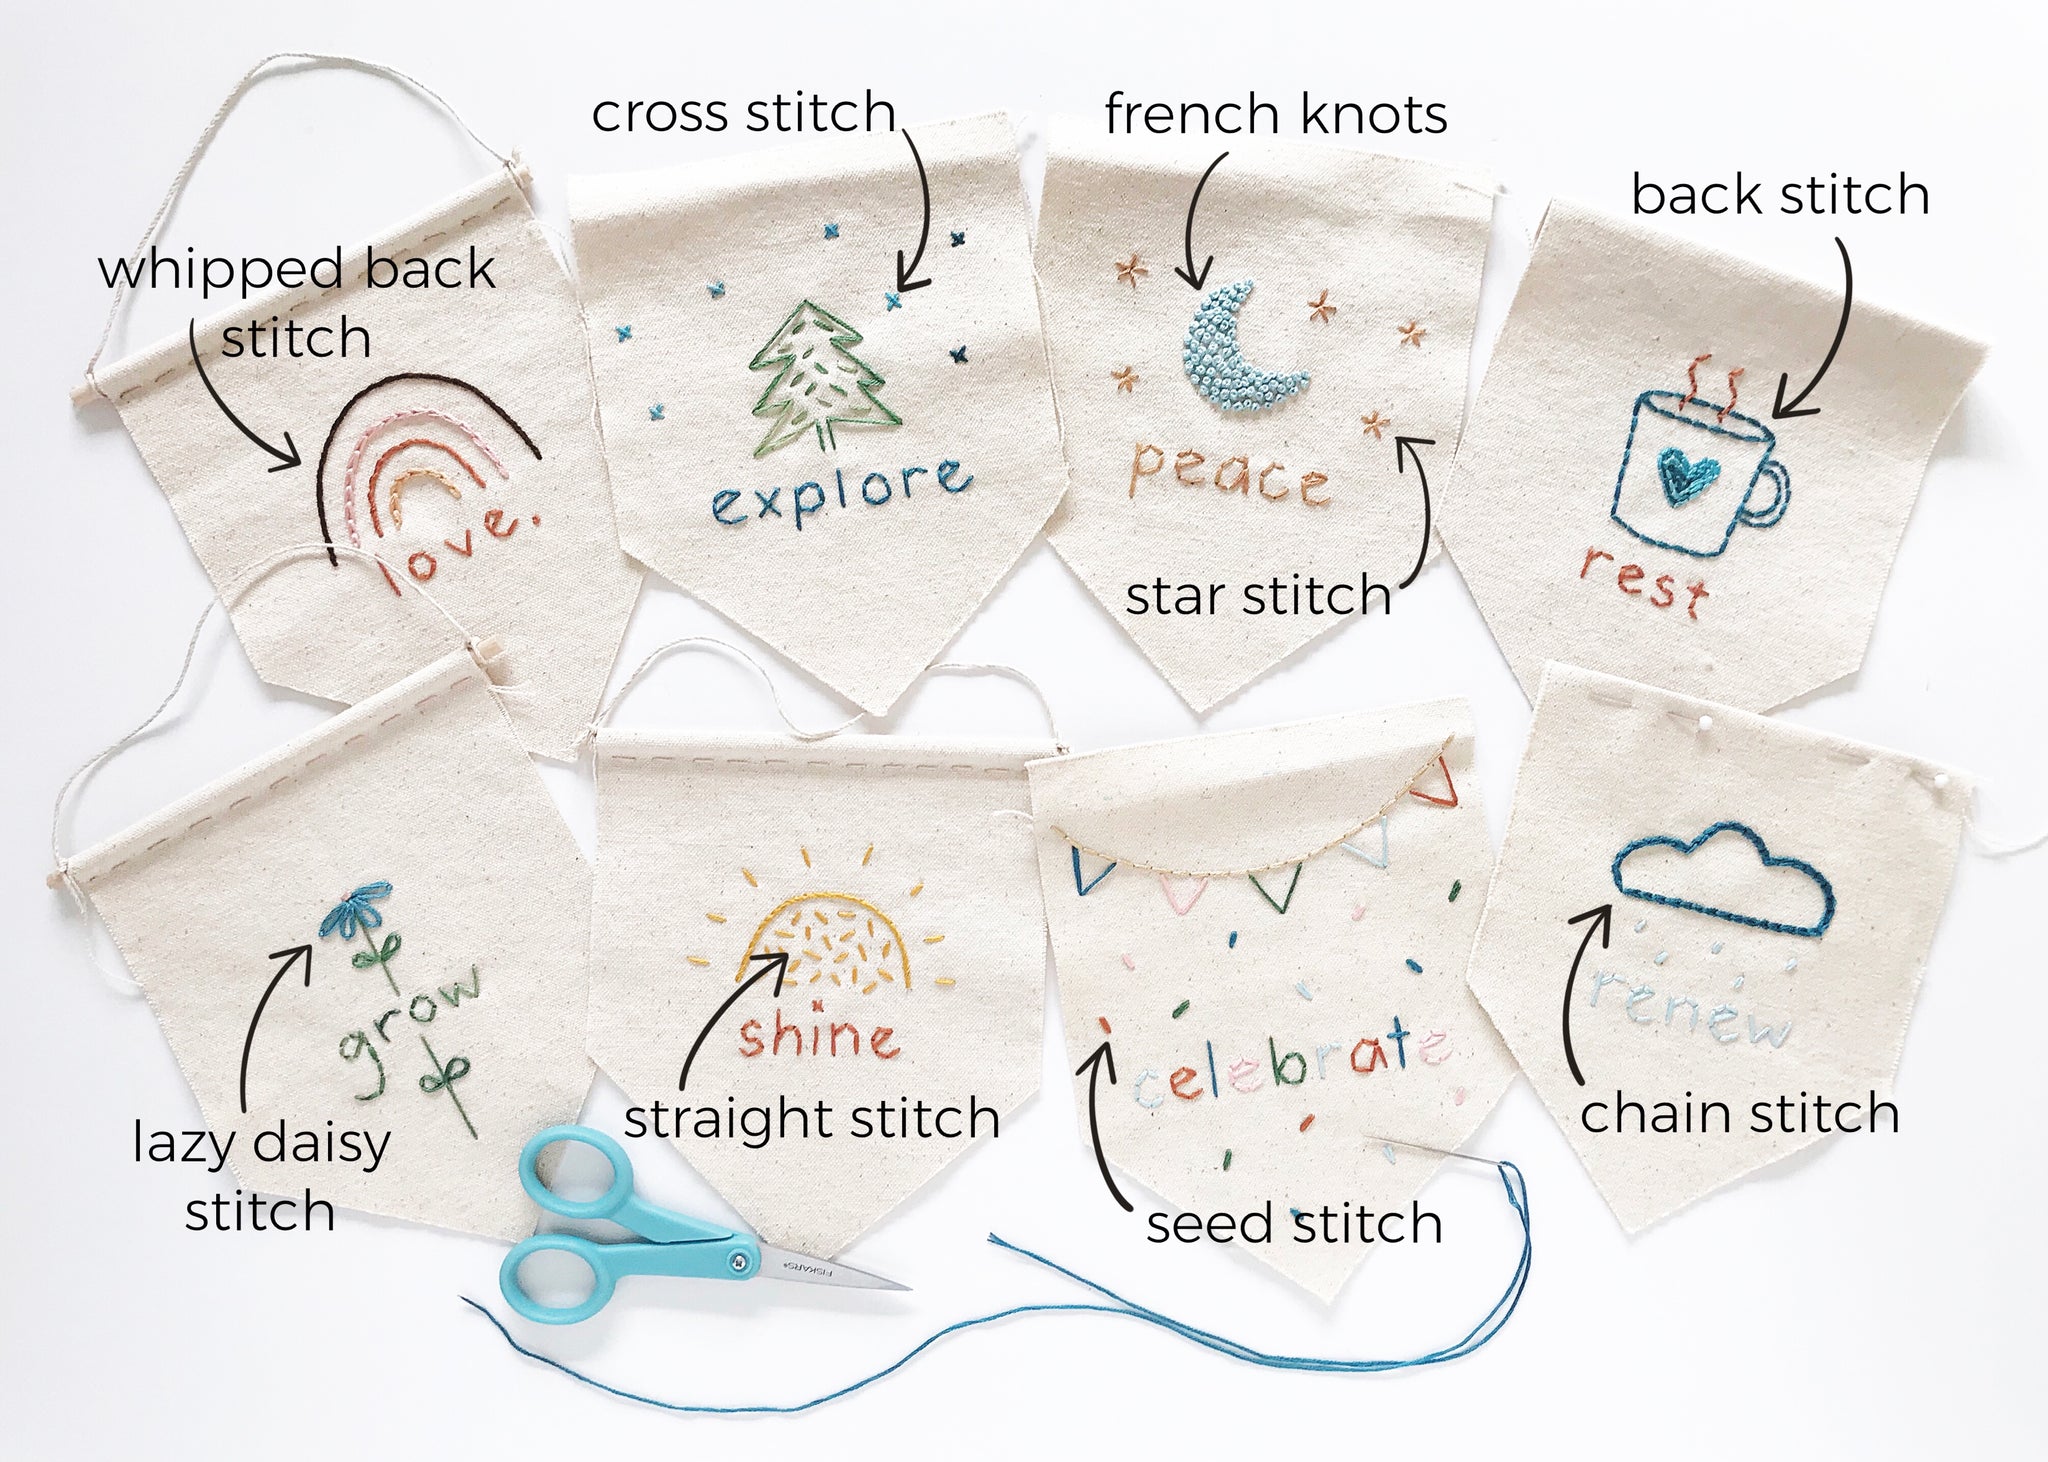 Stitch examples